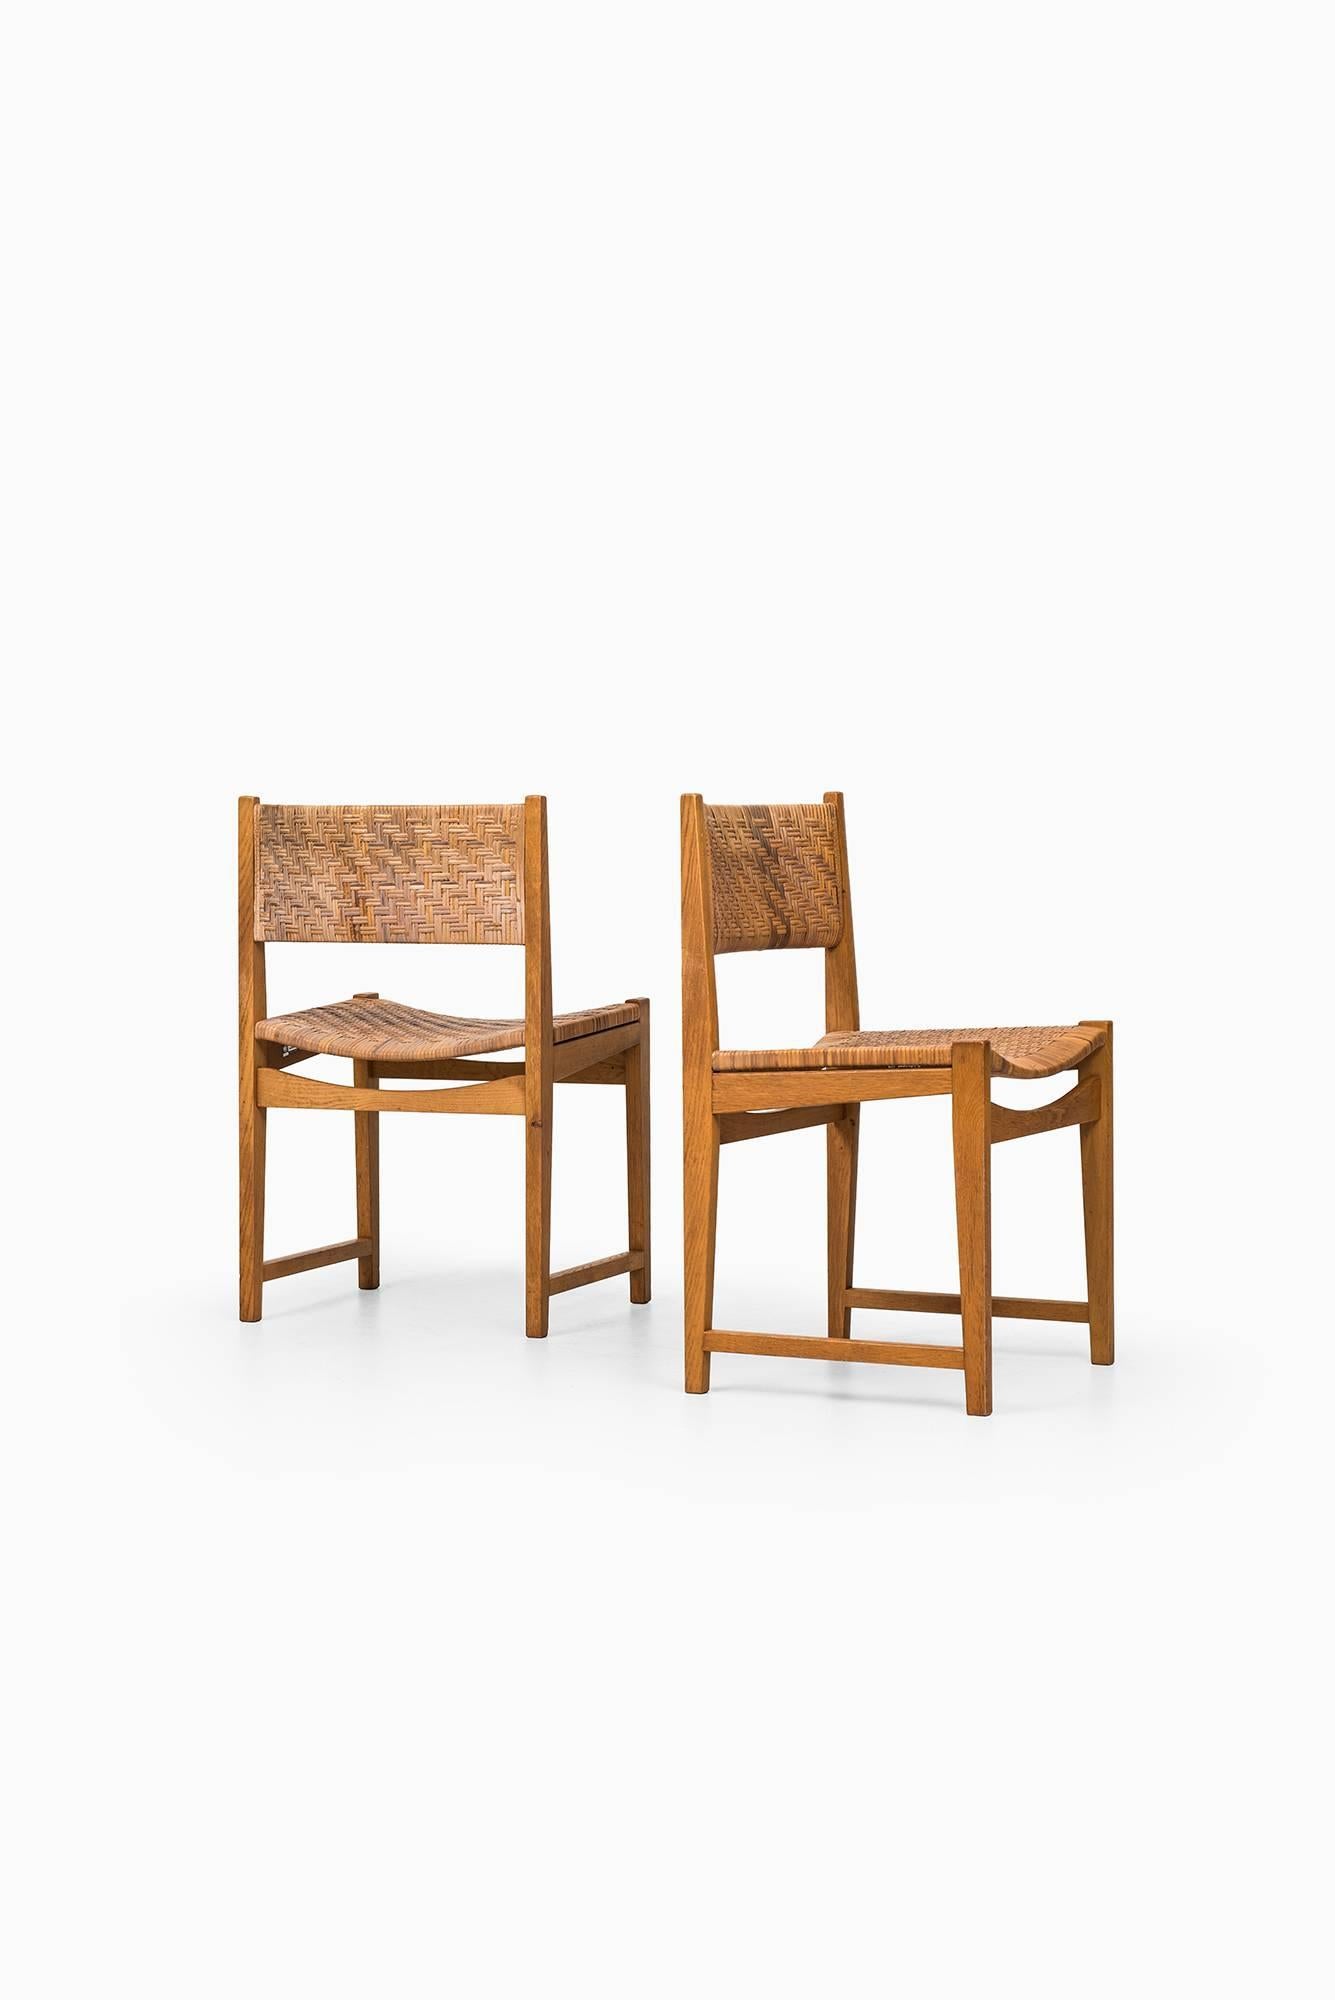 Scandinavian Modern Peter Hvidt & Orla Mølgaard-Nielsen Dining Chairs Model 350